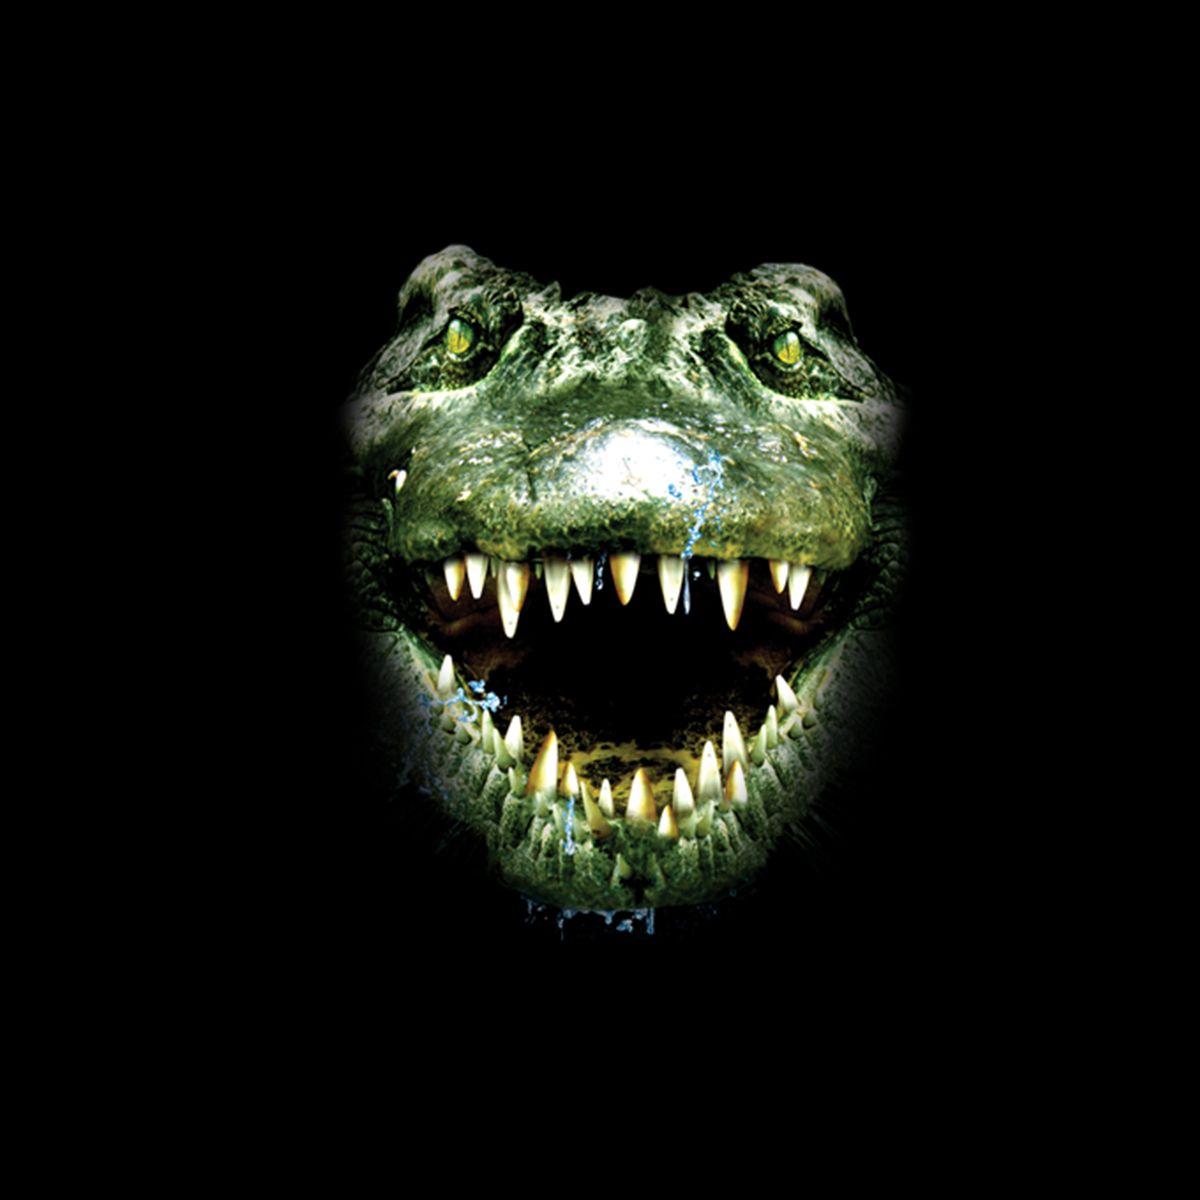 Alligator Face Logo - Alligator Face Men Sweatshirt S-3XL New | eBay